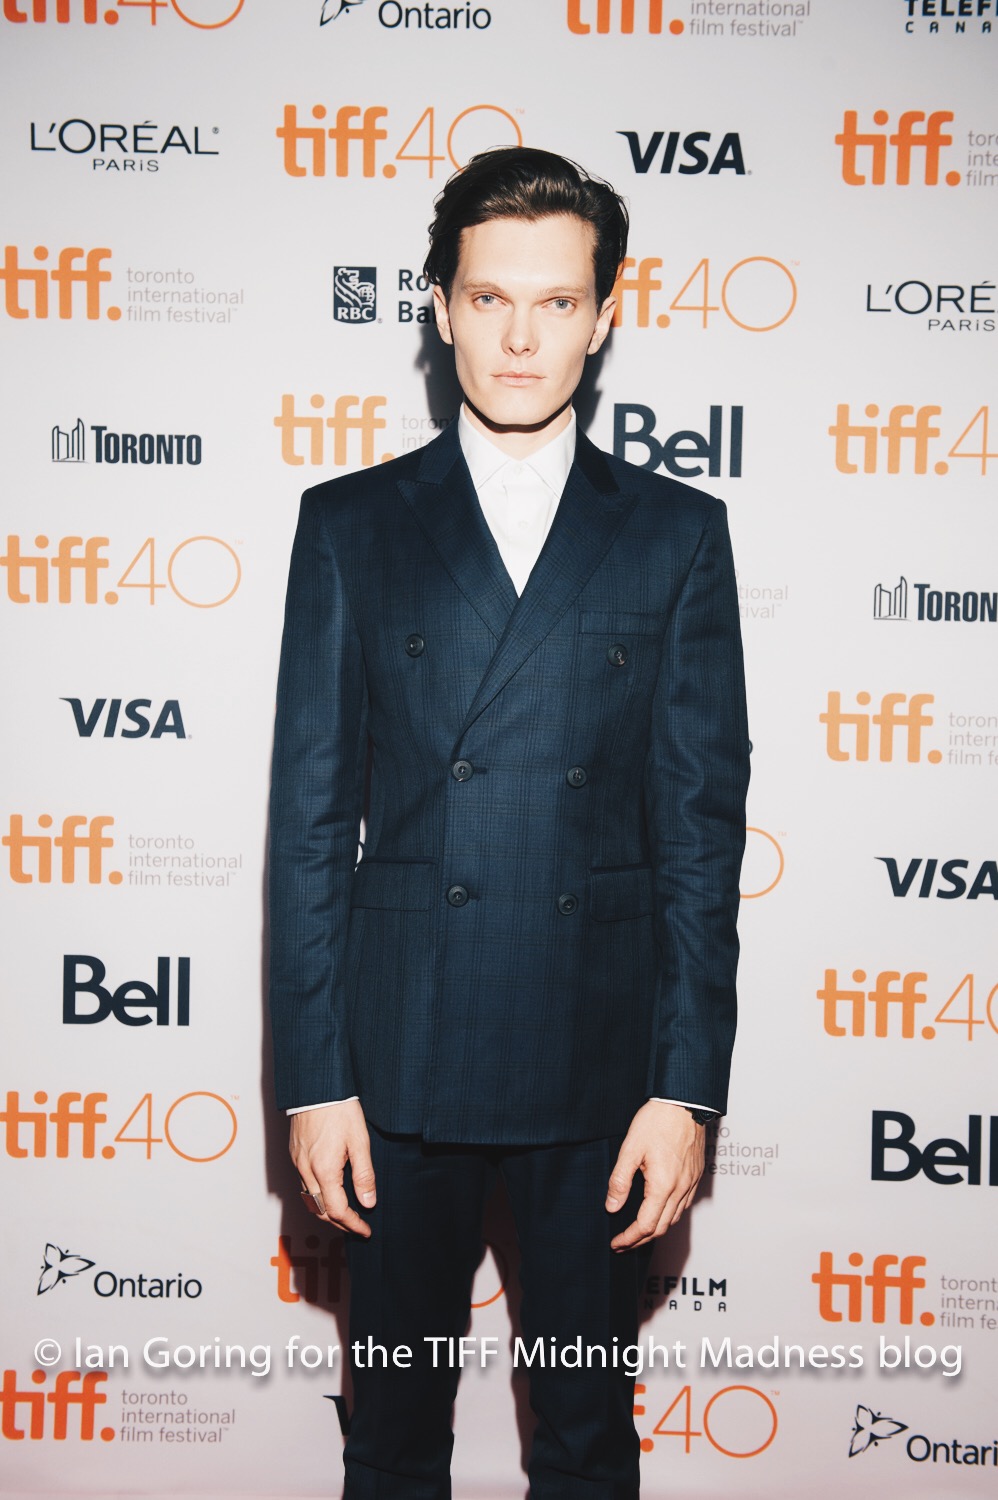 Toronto International Film Festival, Midnight Madness 2015